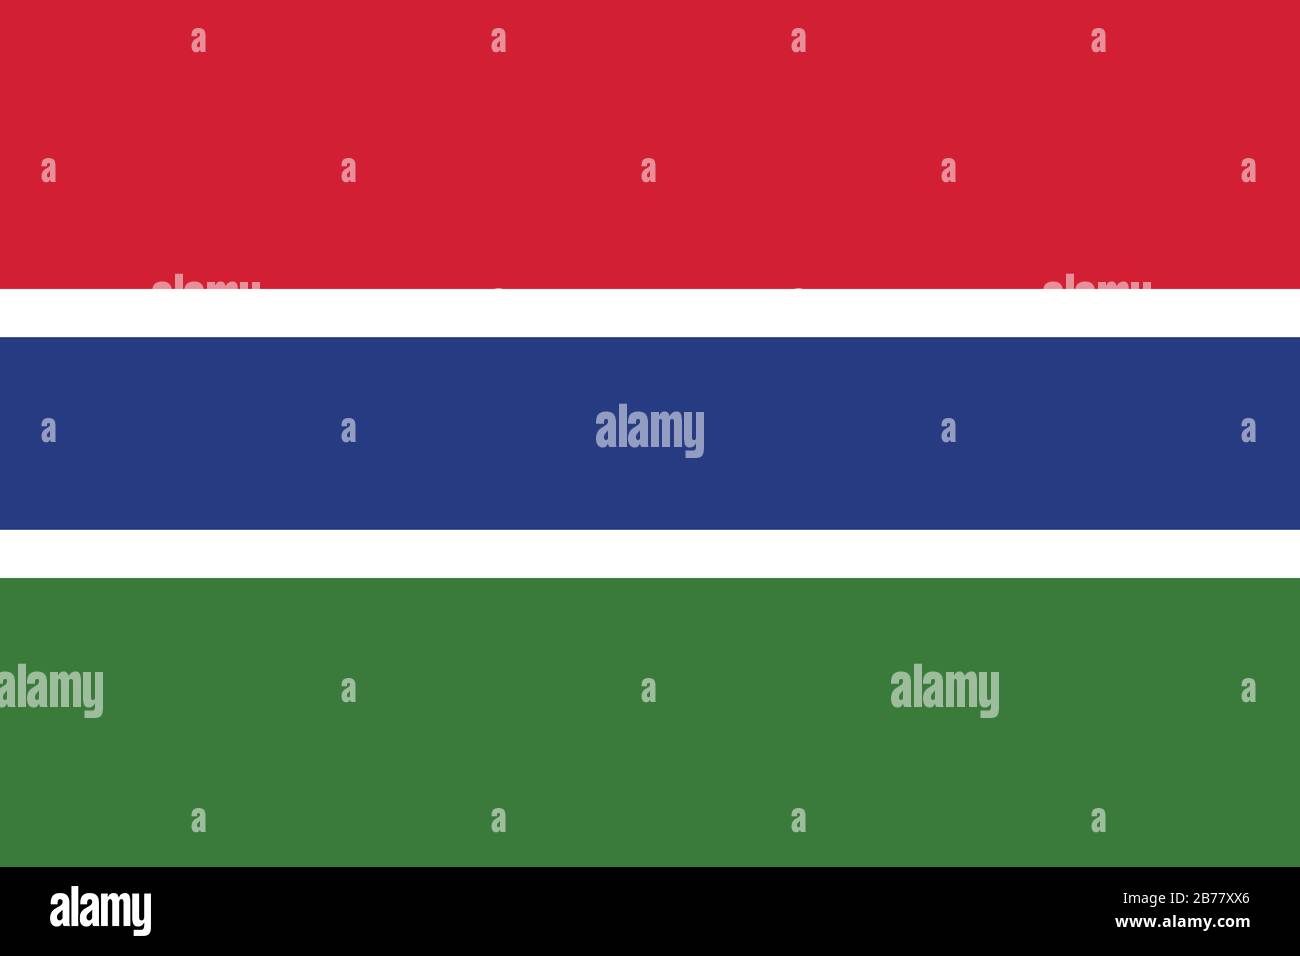 Flag of Gambia - Gambian flag standard ratio - modalità colore RGB reale Foto Stock